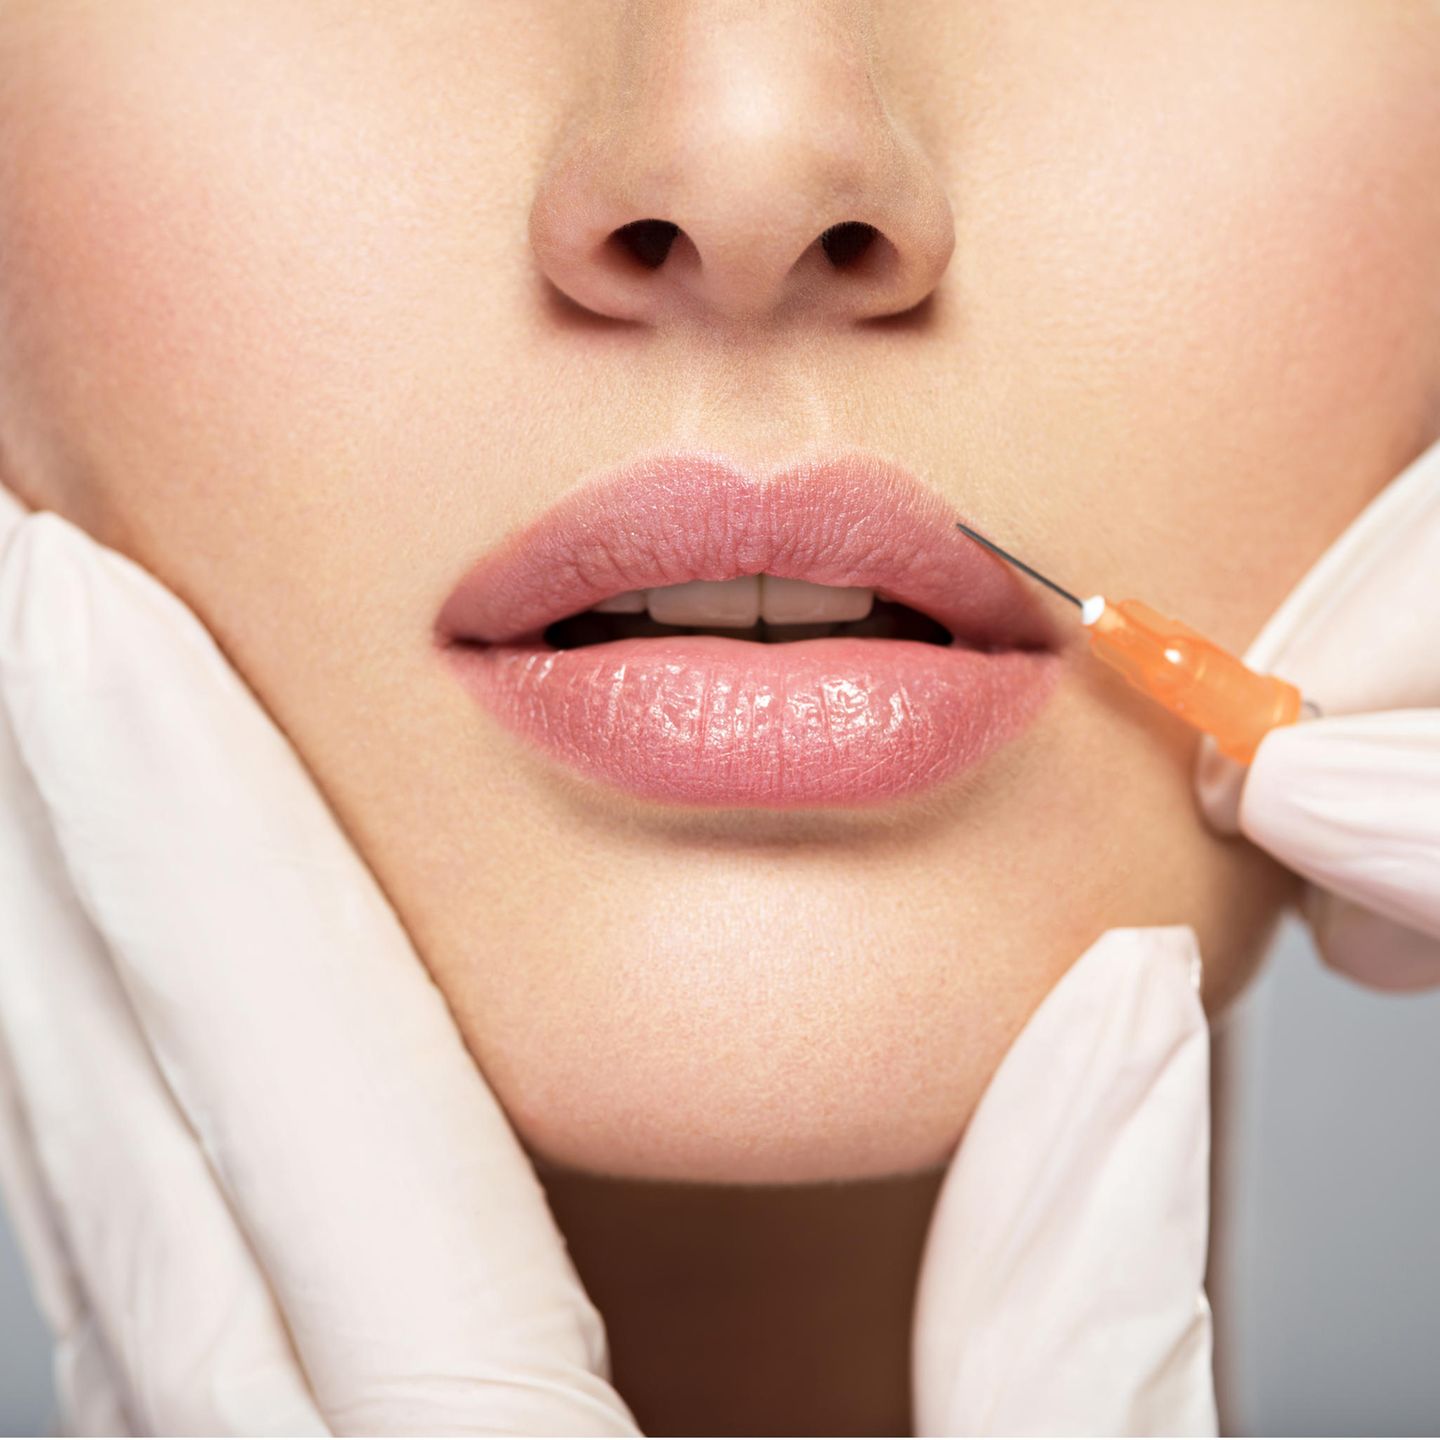 Beauty operation: syringe on woman's lip